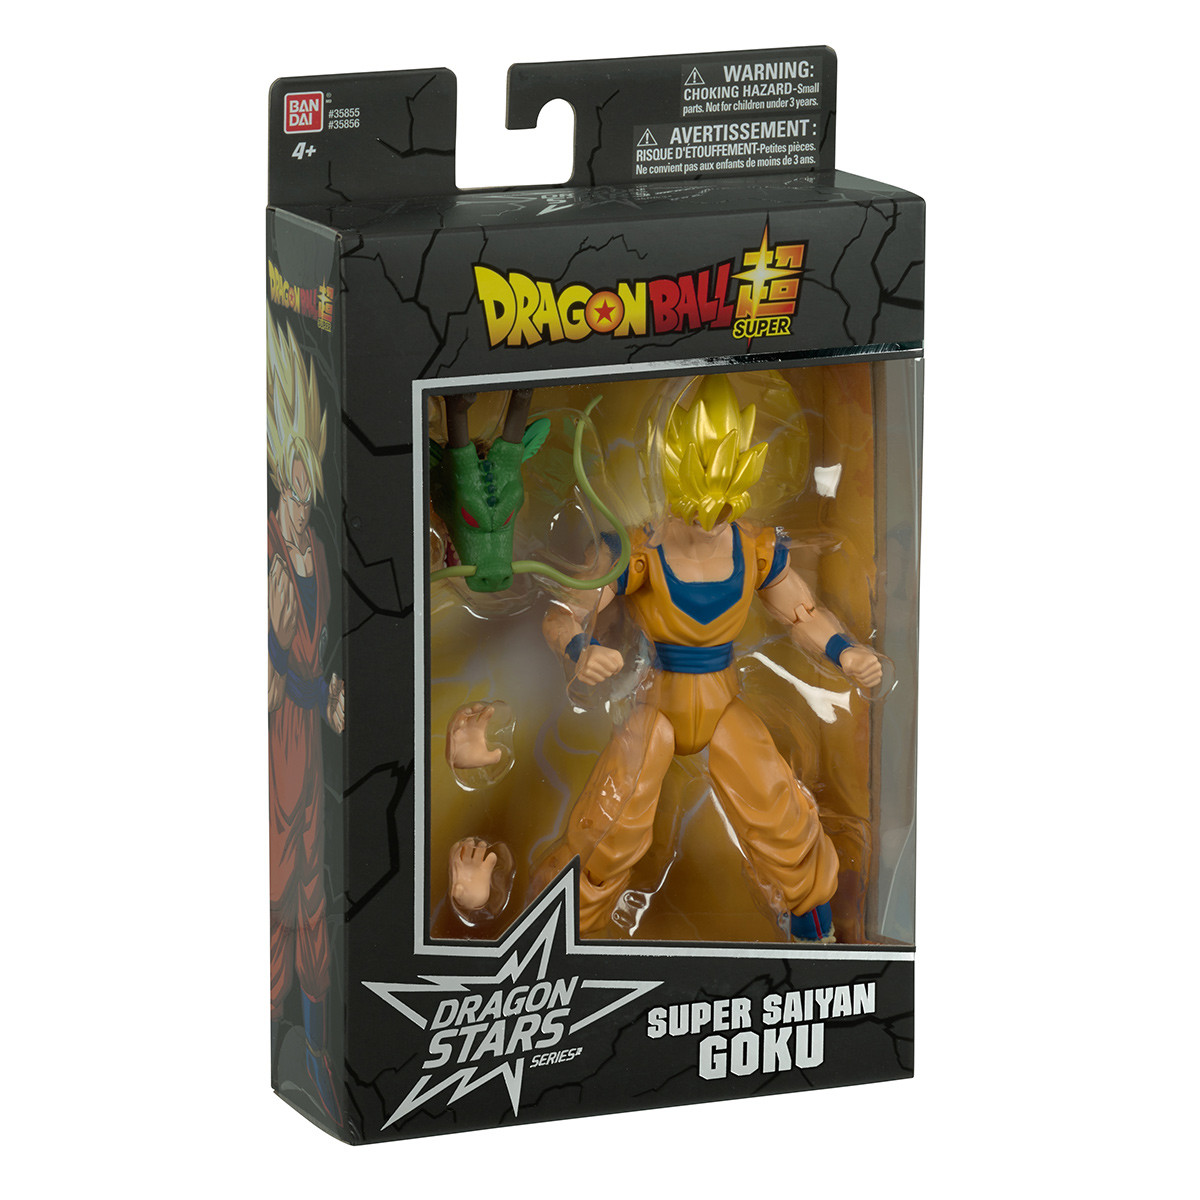 Super Saiyan Goku - Dragon Star Series action figure 35855-35856